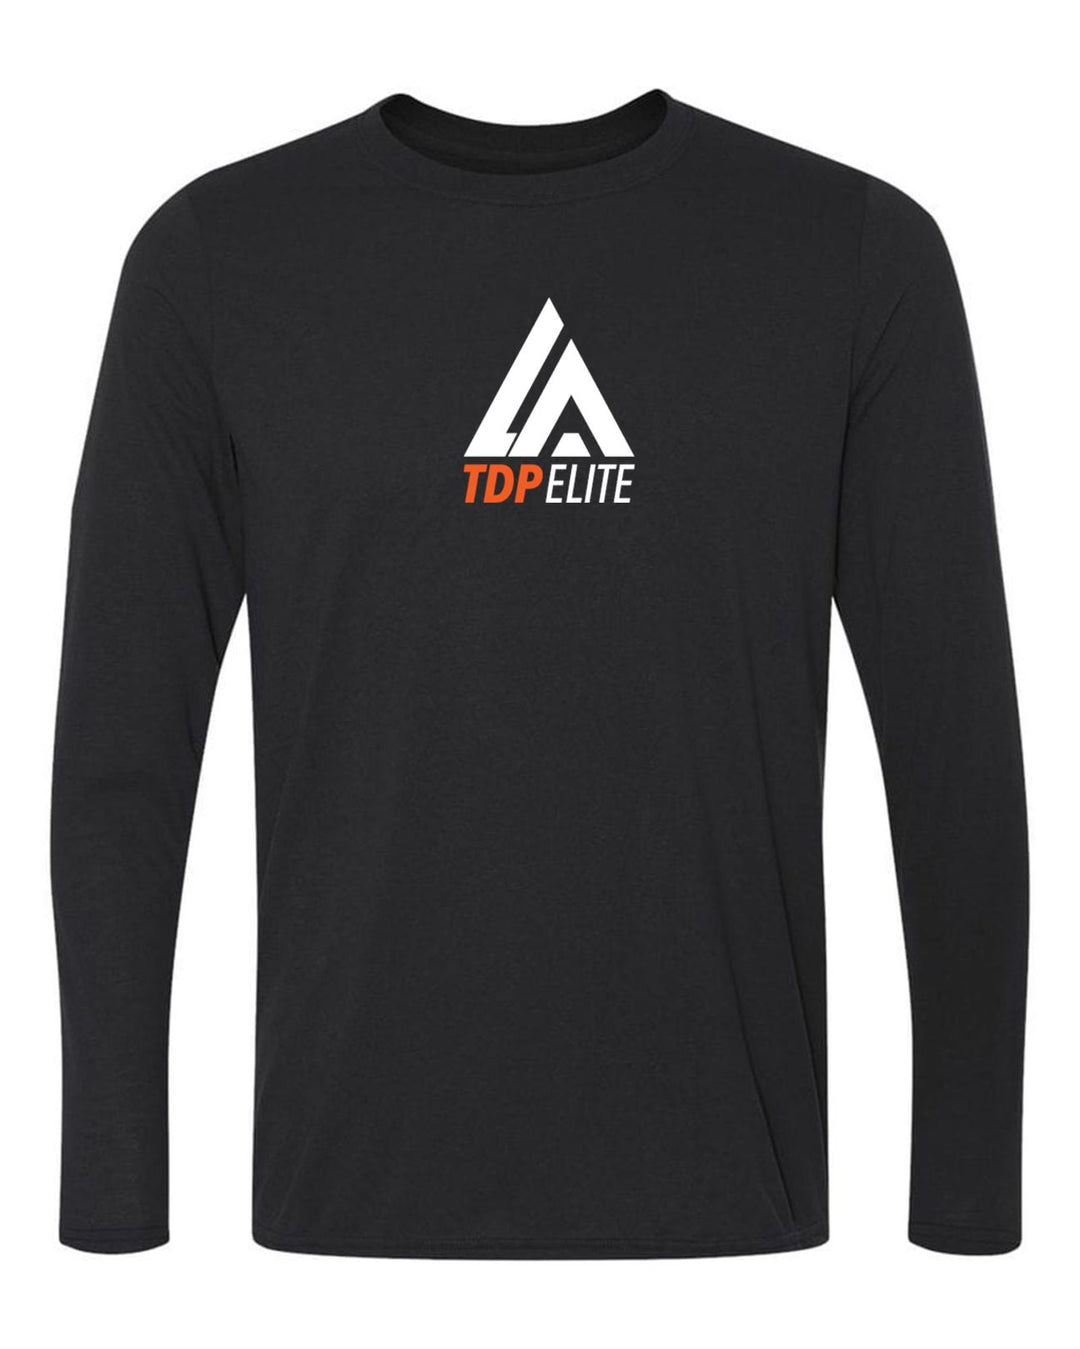 LATDP Elite Long-Sleeve T-Shirt LATDP Spiritwear BLACK YOUTH SMALL - Third Coast Soccer